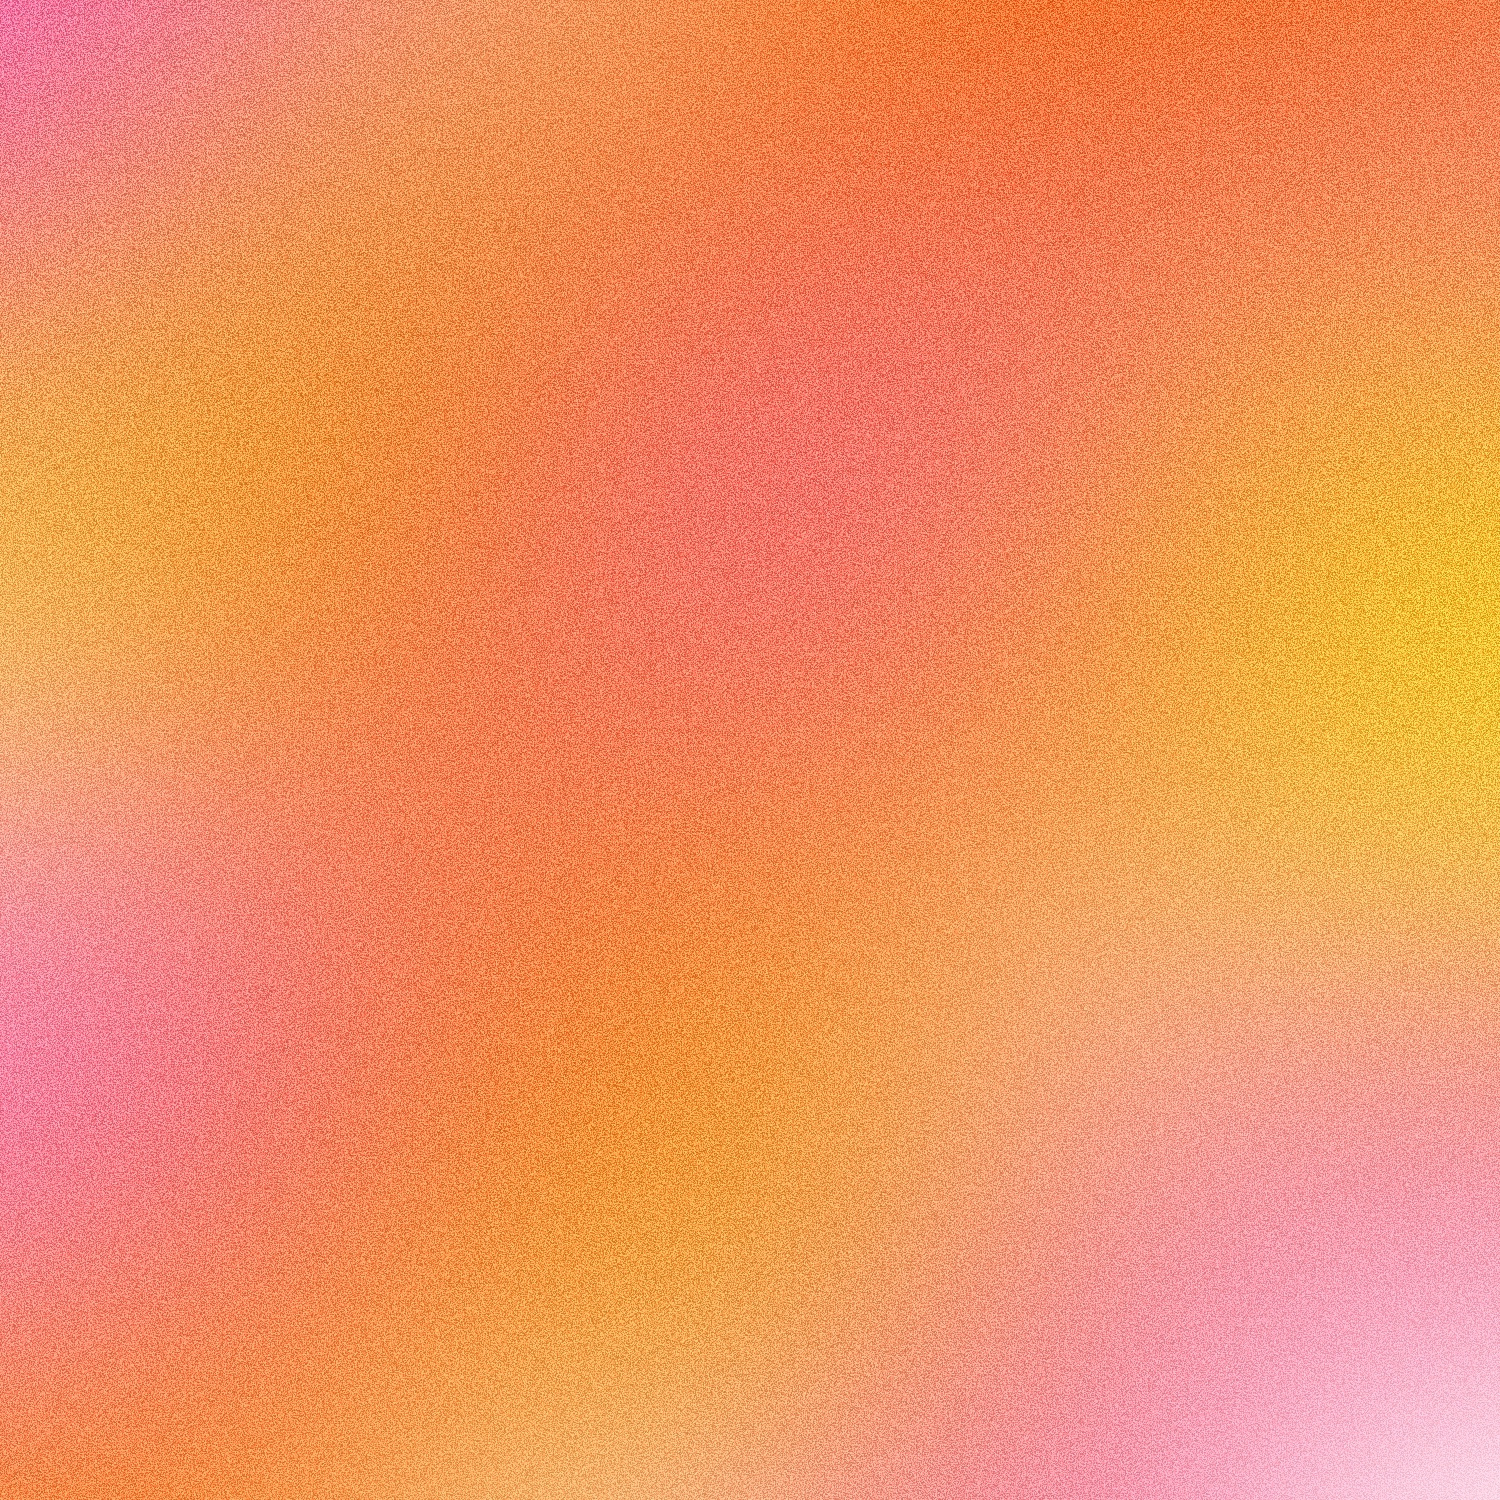 Pink and Orange Gradient Grainy Background